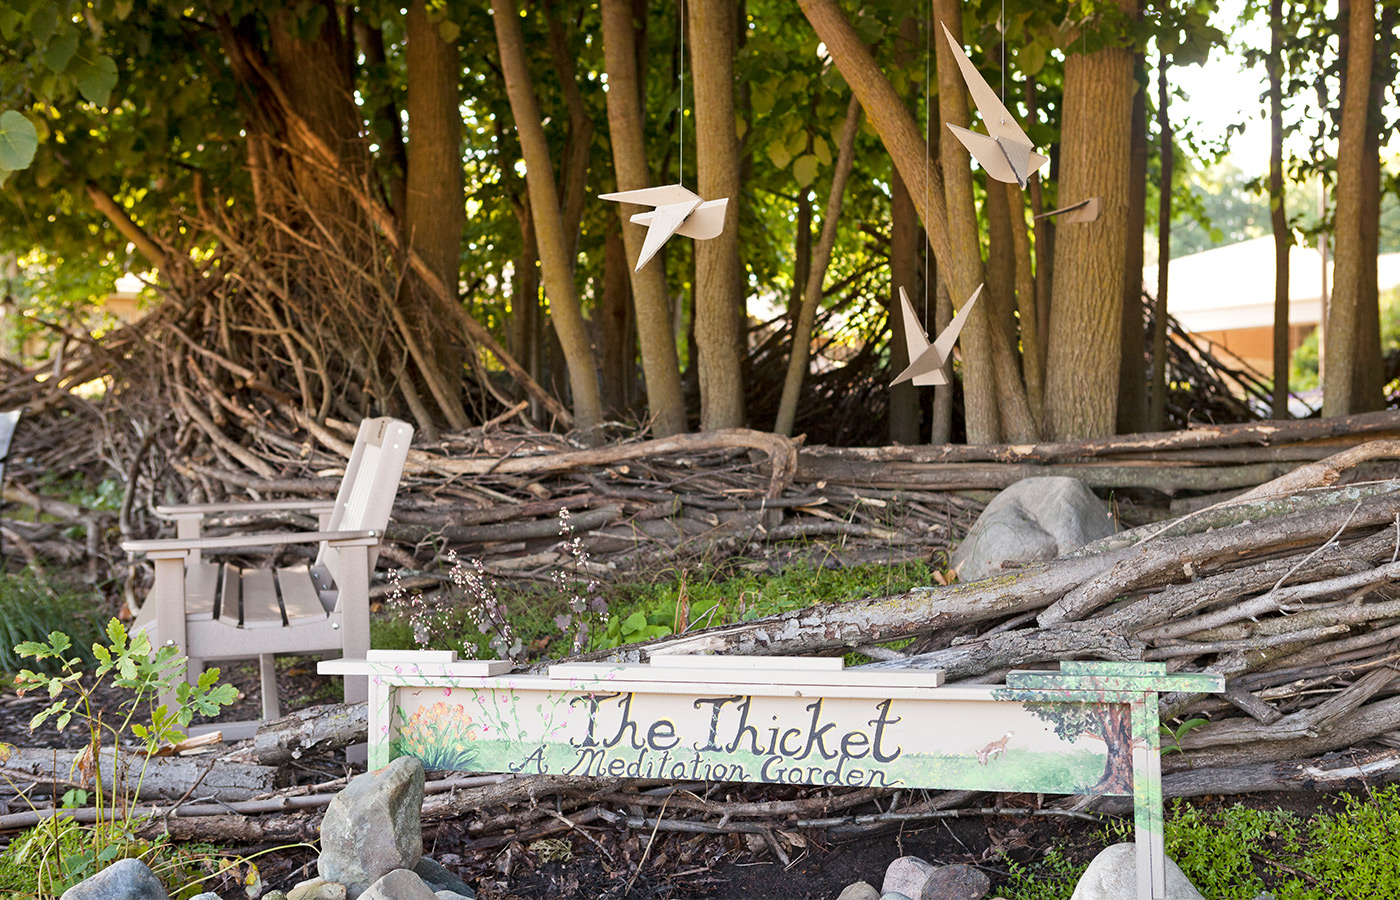 The Thicket meditation garden